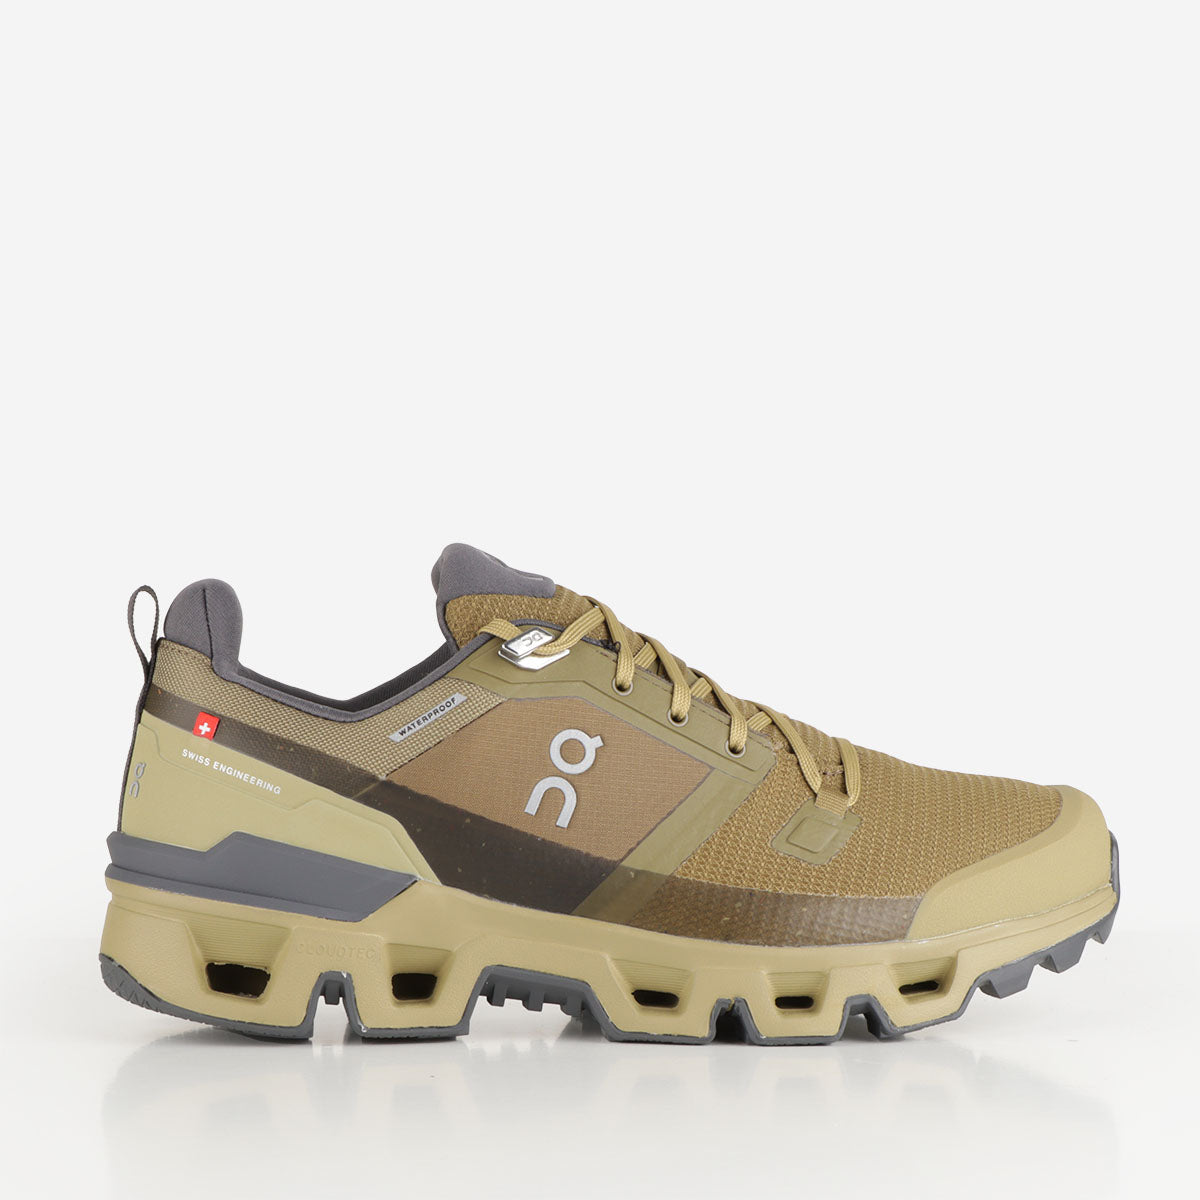 ON Cloudwander Waterproof Shoes, Hunter Safari, Detail Shot 1